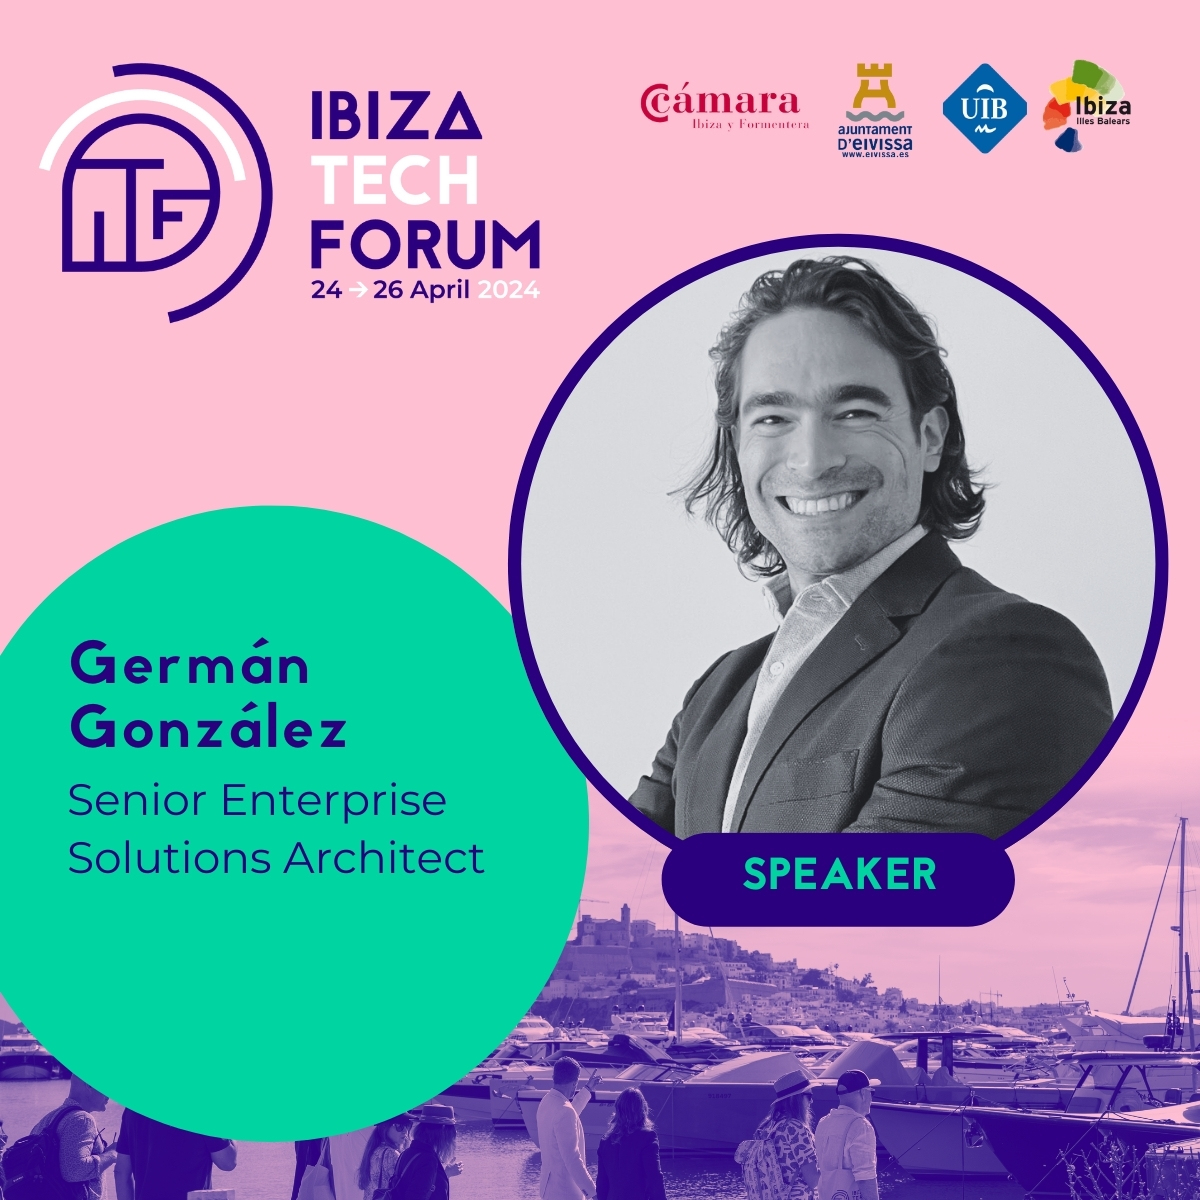 🌐 New speaker confirmed: Germán González🌐 

🌐 Nuevo ponente confirmado: Germán González🌐 

@Ibiza_Travel

#ibizatechforum #ibiza #technology #innovation #startups #eivissa #techibiza #entrepreneurs #ai #turismo #smartcities #sustainability #tourism